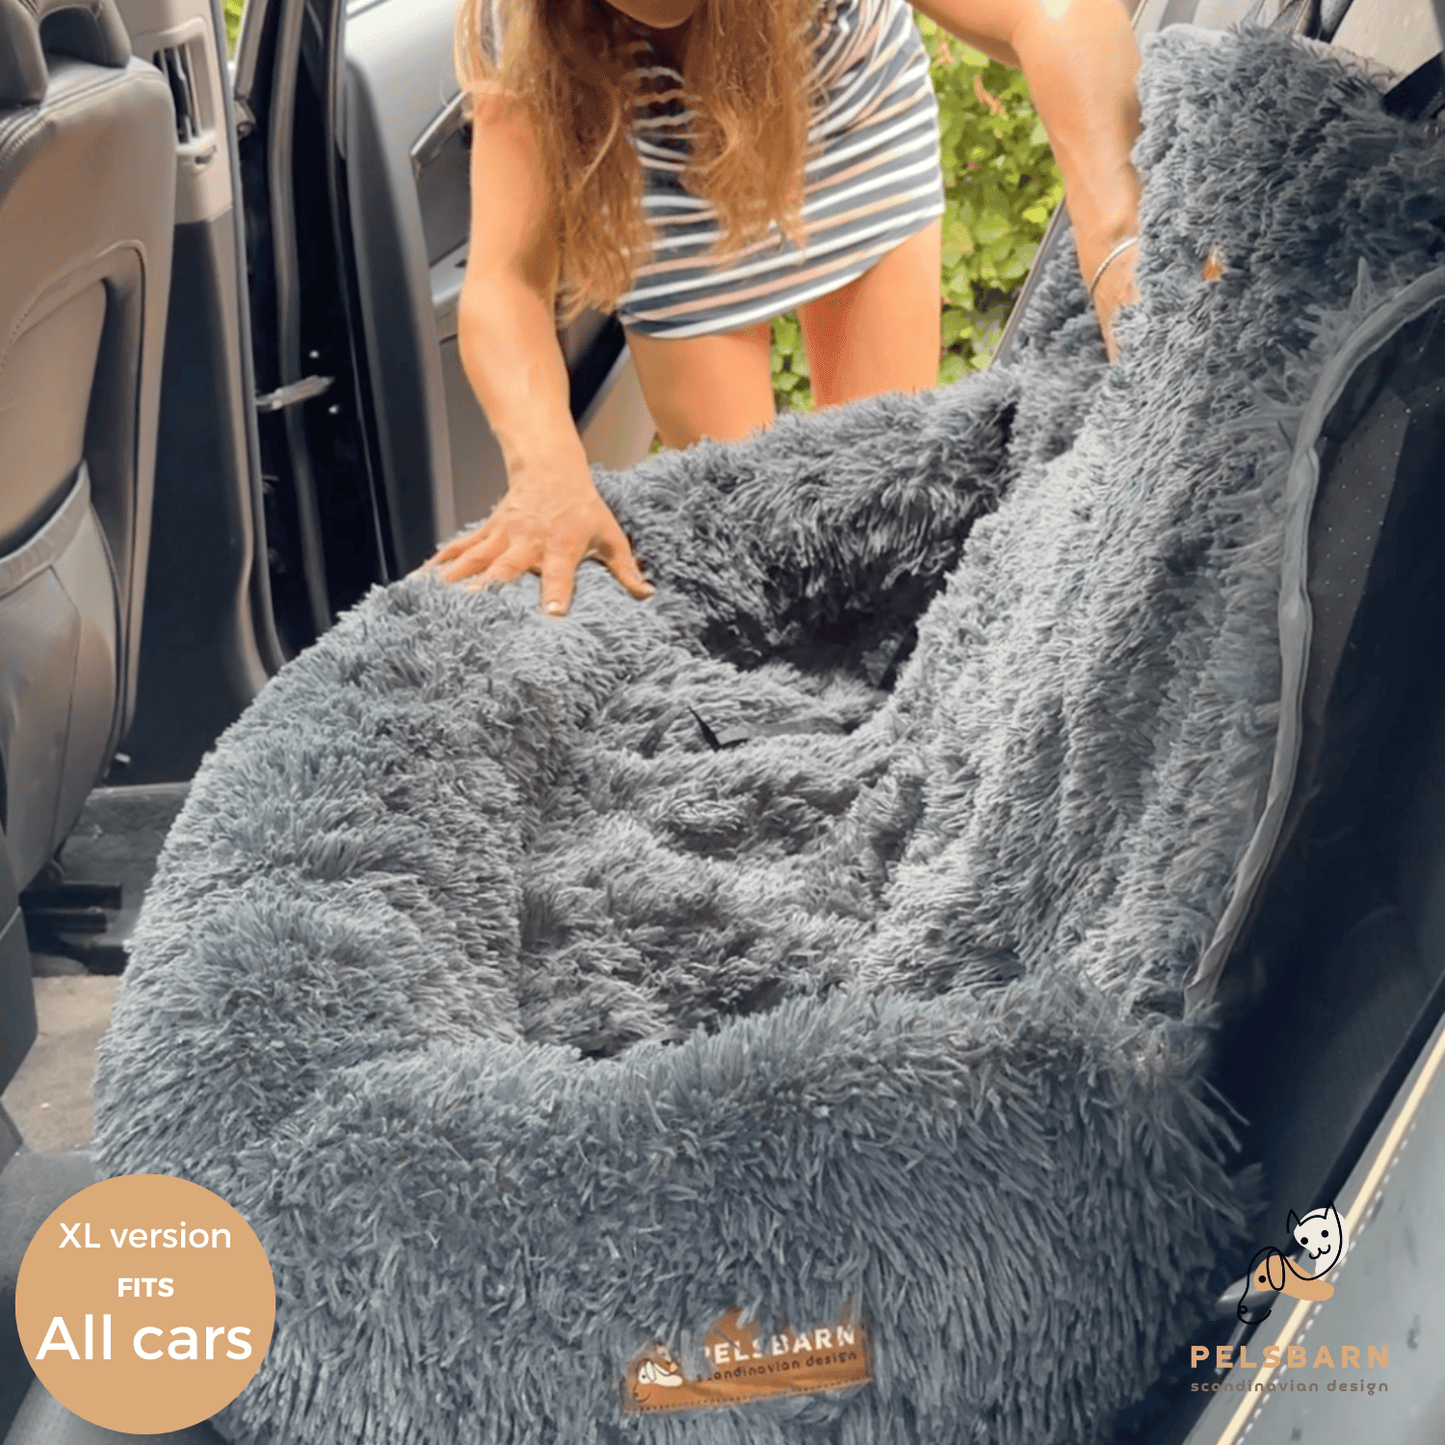 Pelsbarn Comfy Car Bed